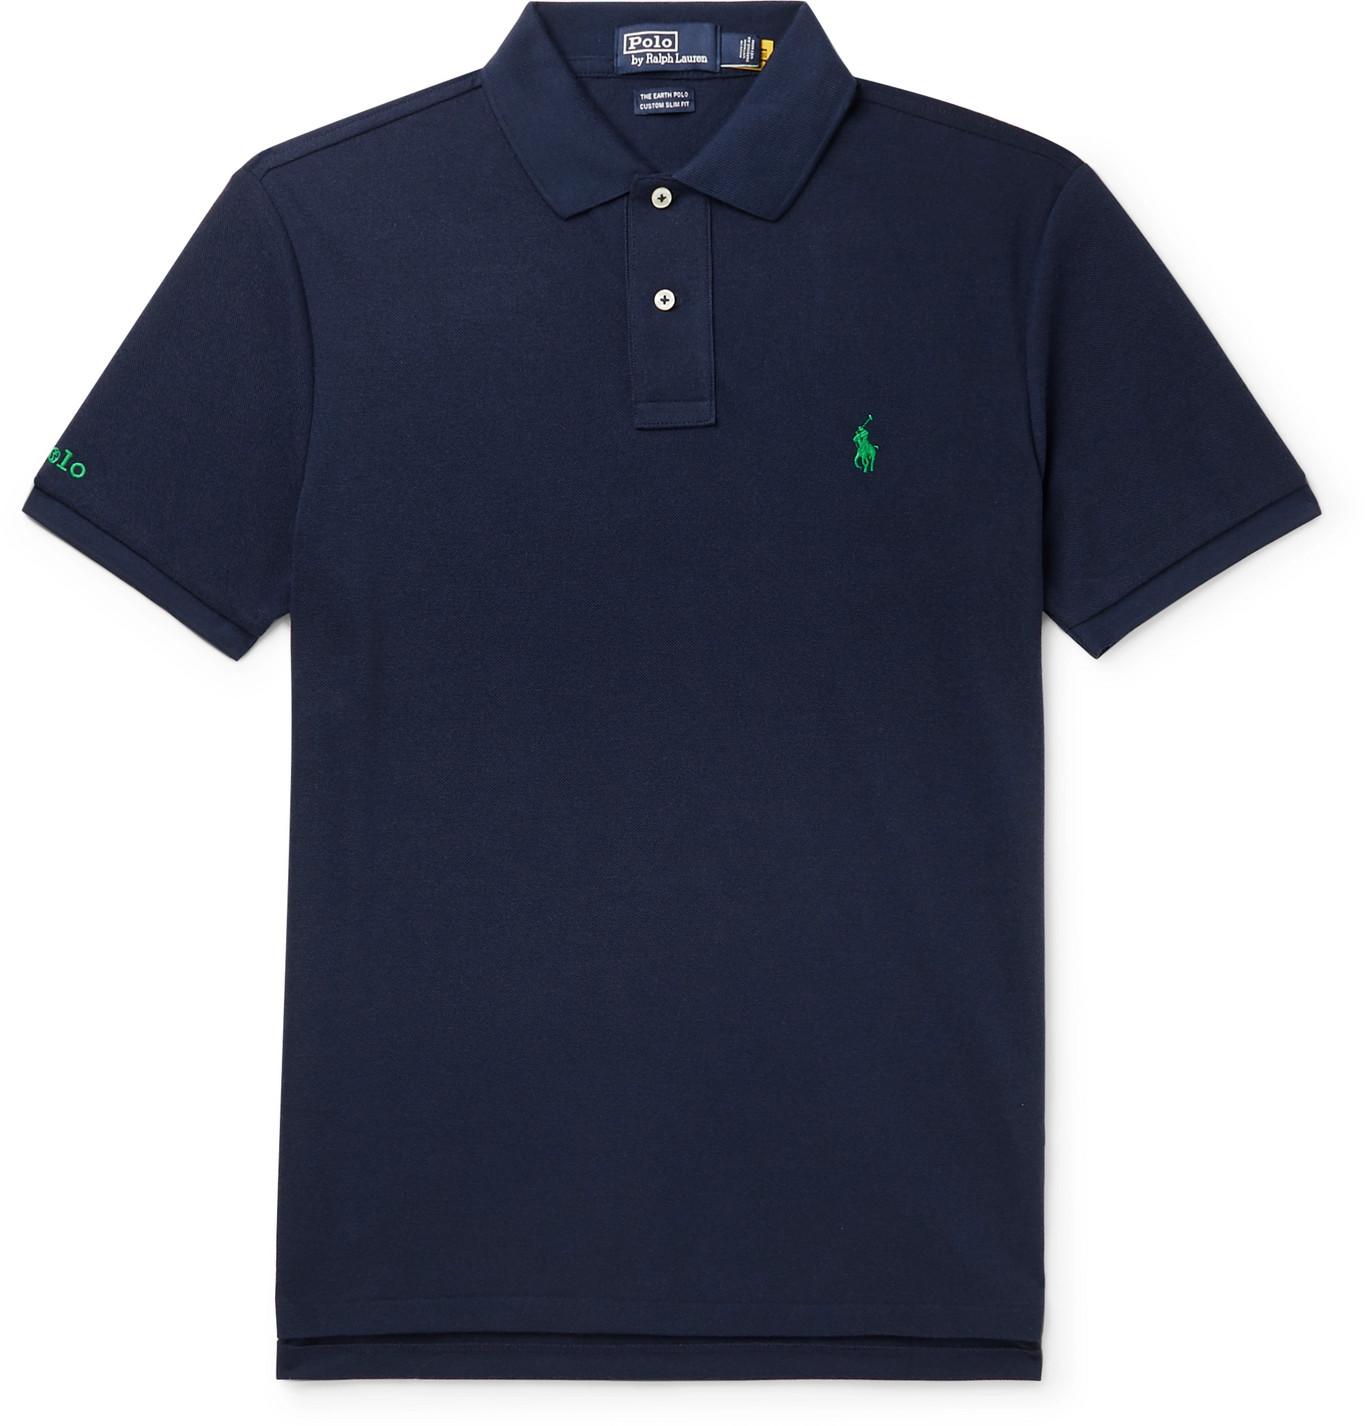 Polo Ralph Lauren Piqué Polo Shirt in Blue for Men - Lyst